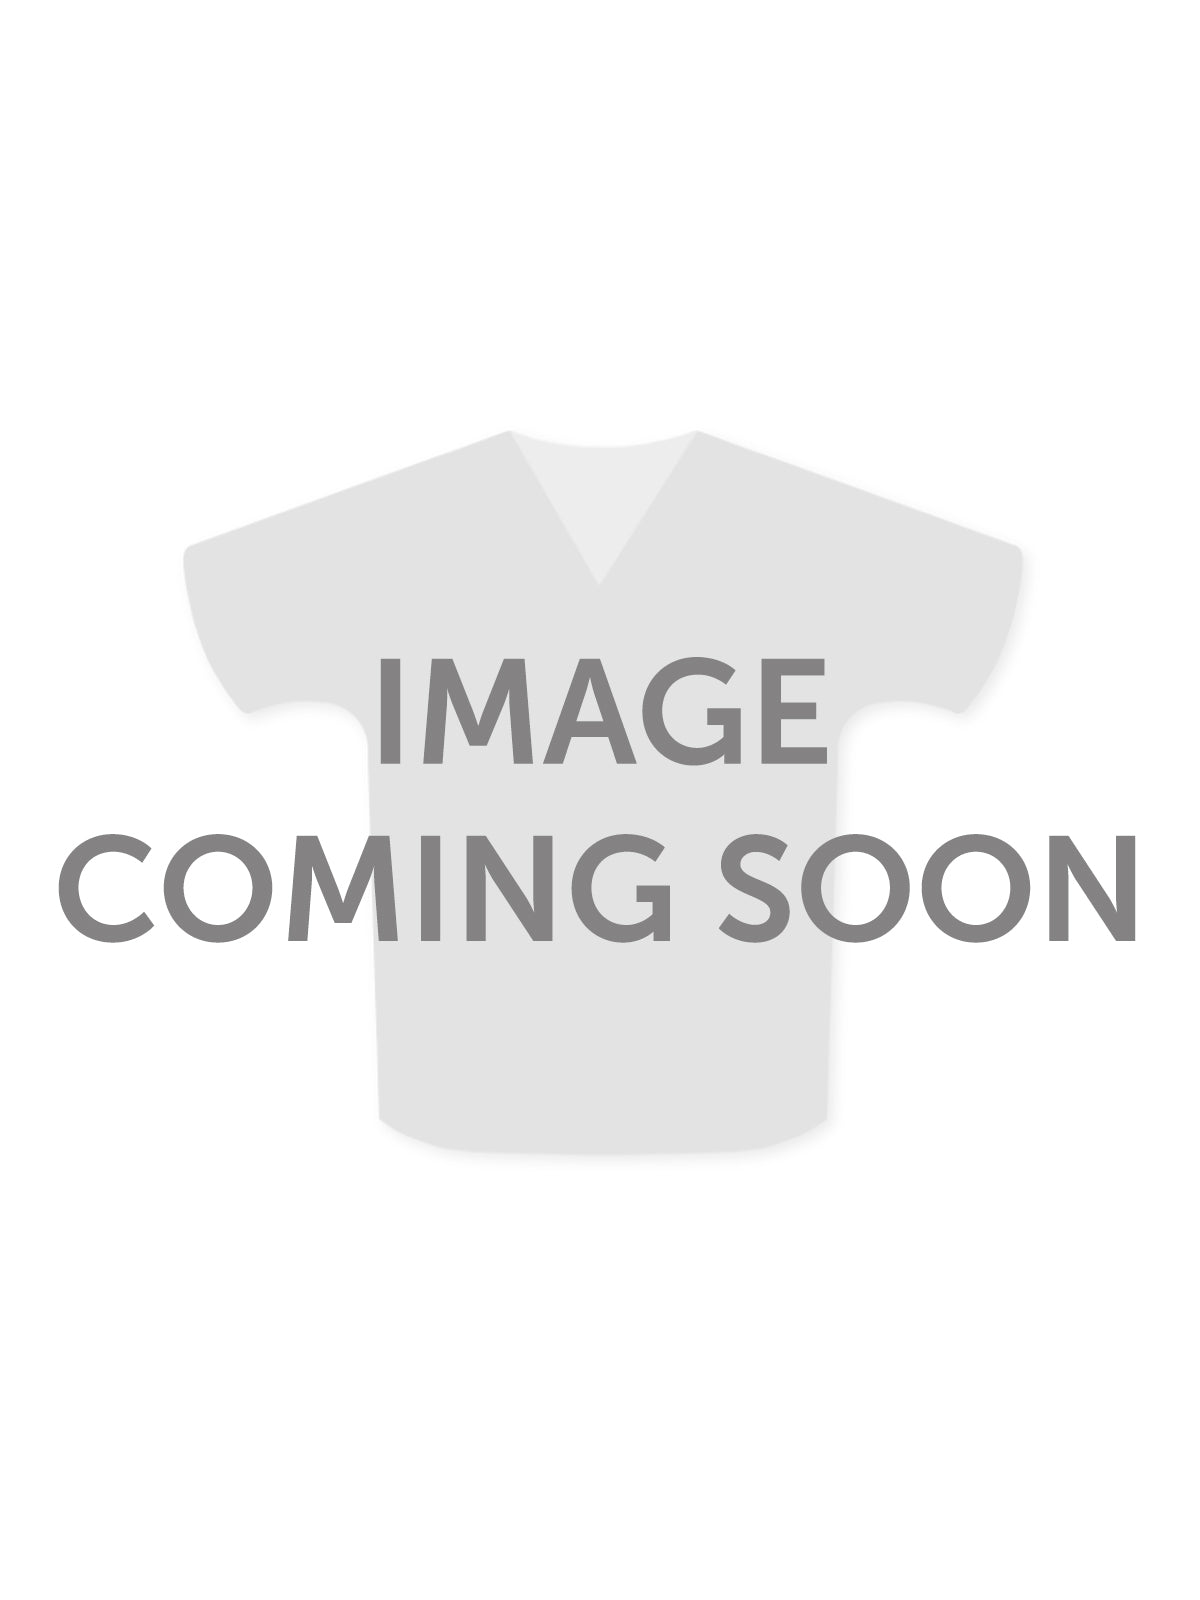 Unisex Patient Gown - 39900 - Yellow